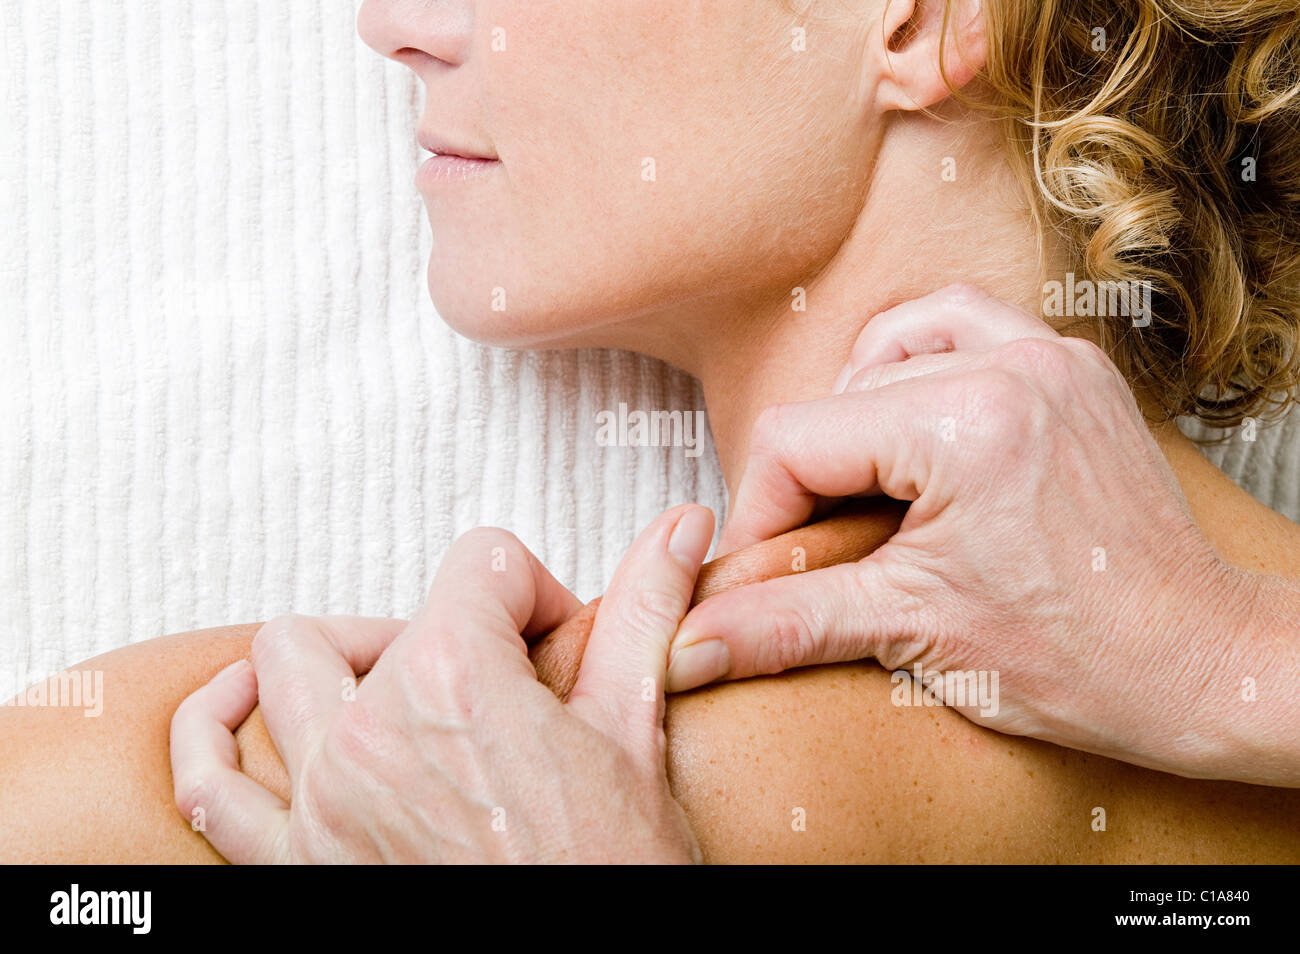 Woman having shoulder massage Stock Photo